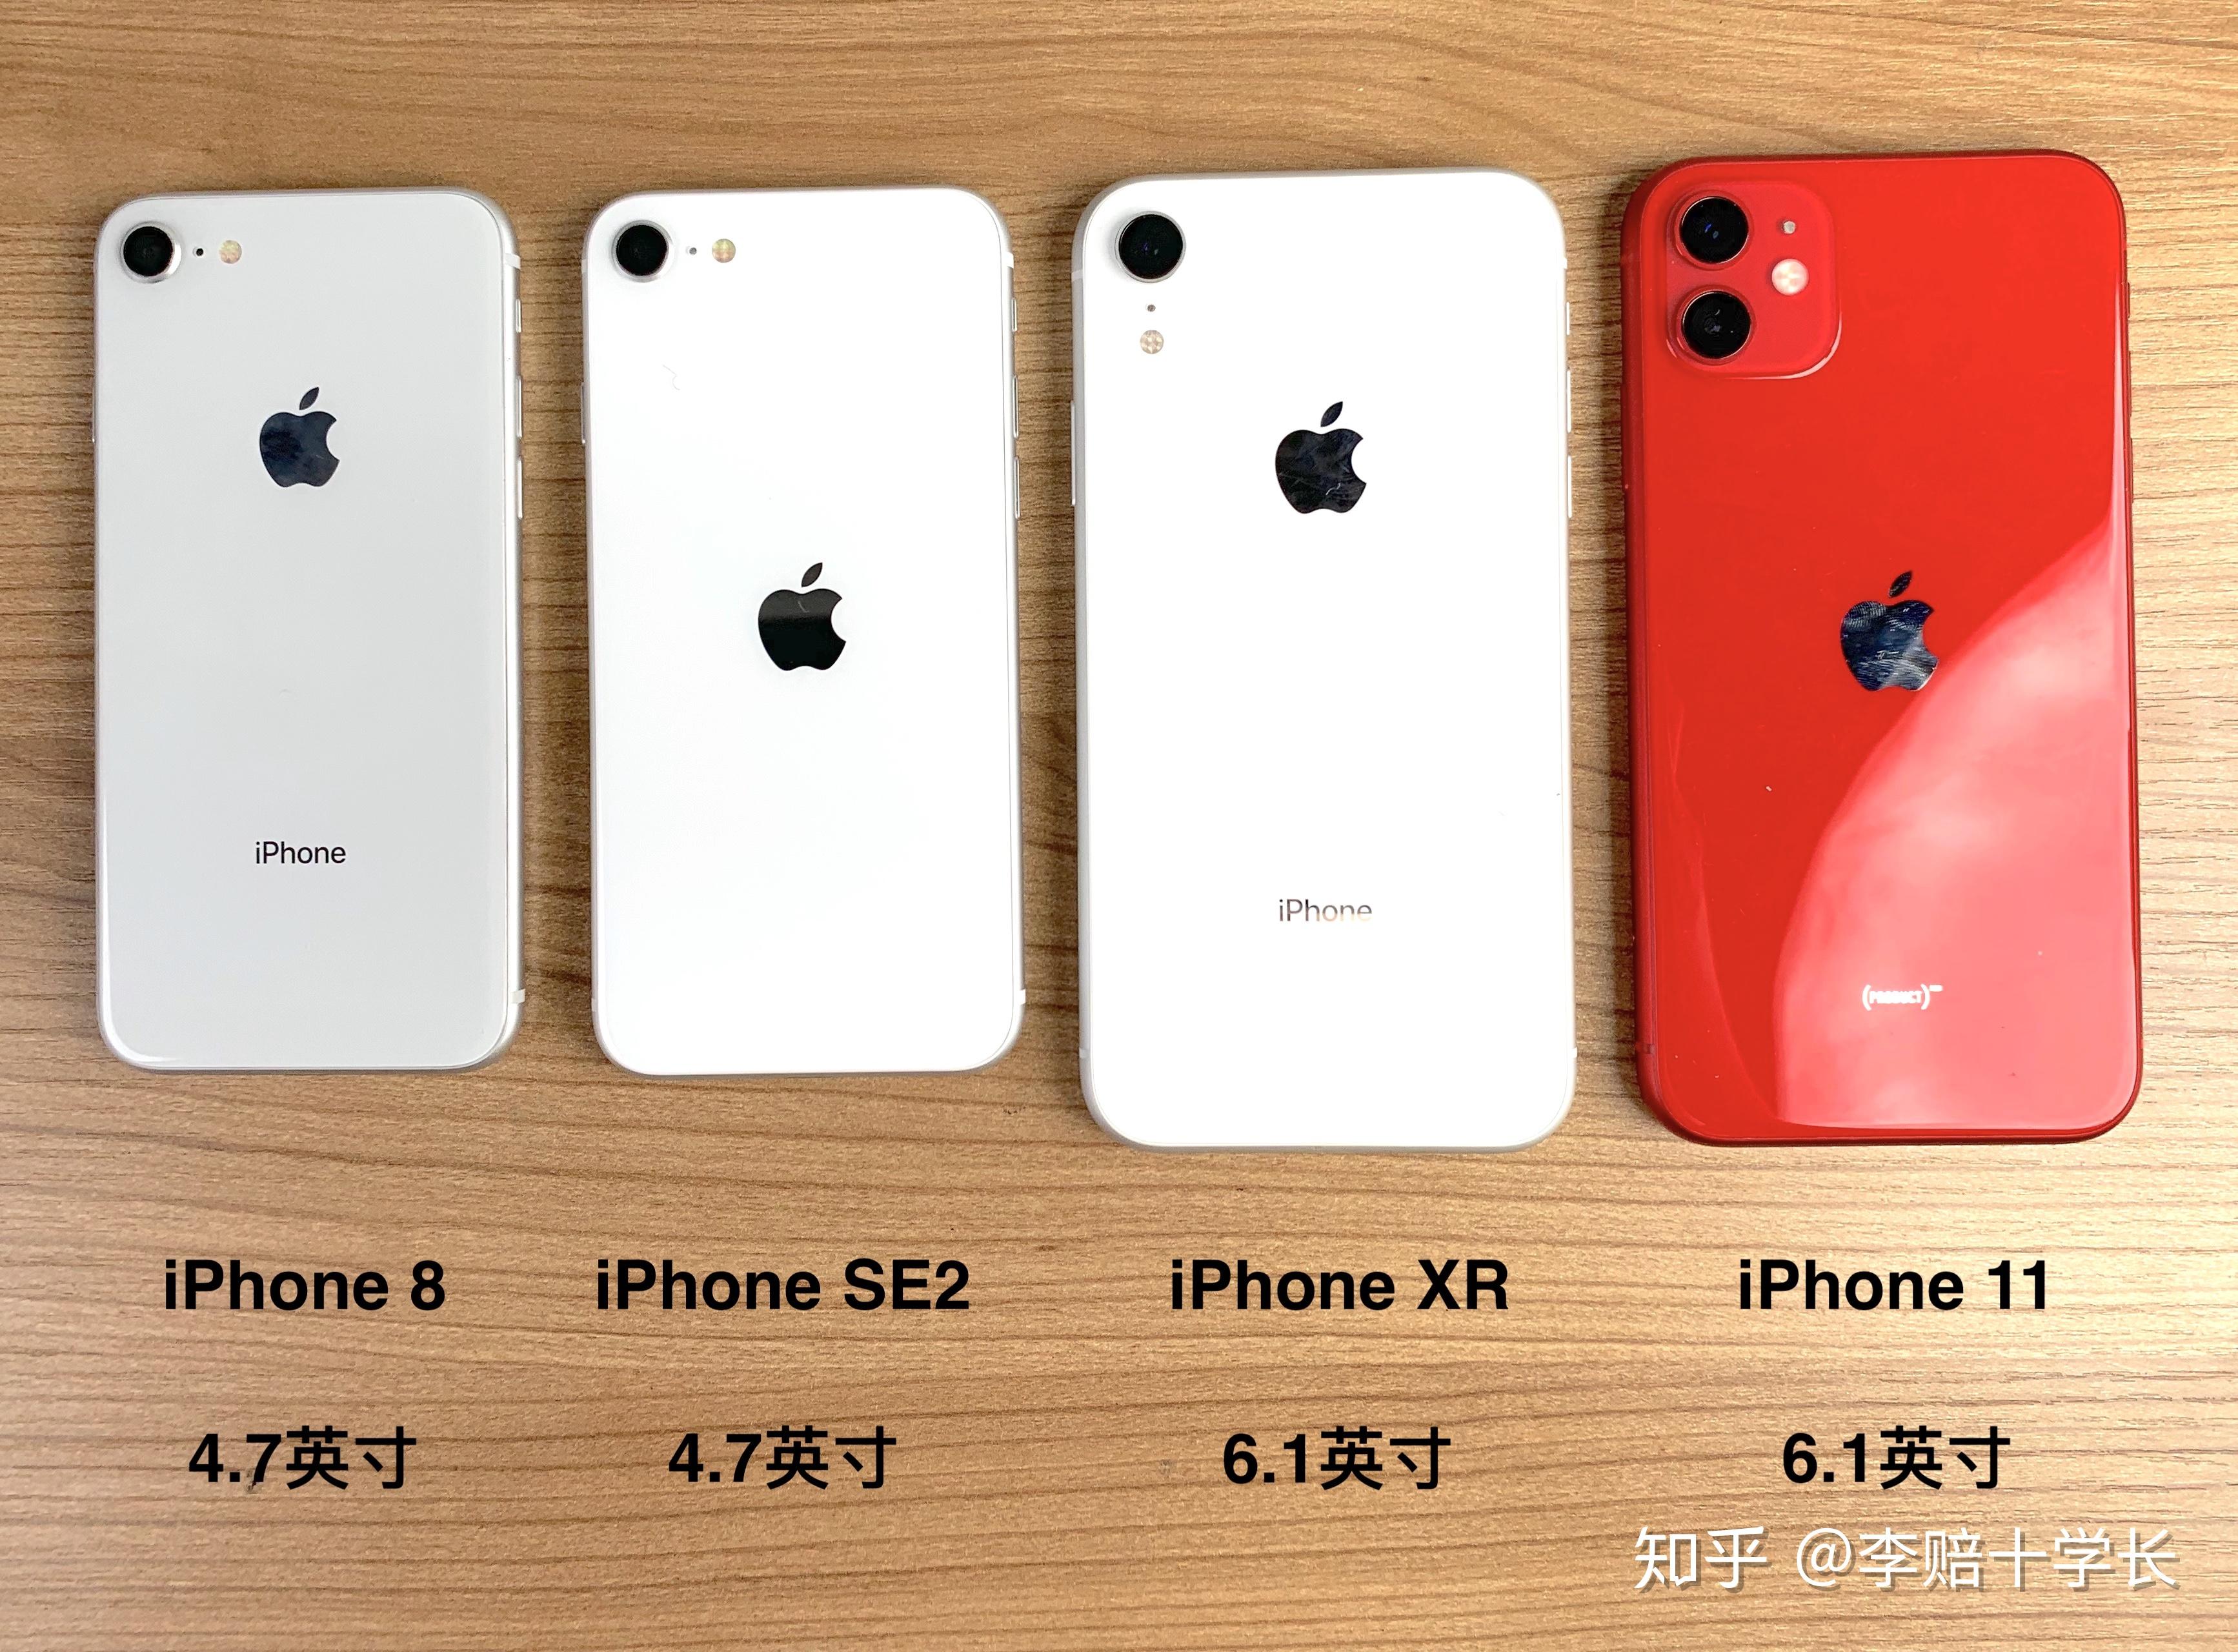 Apple iPhone苹果手机全系列图片价格配置参数对比（含iPhone12系列） - 知乎